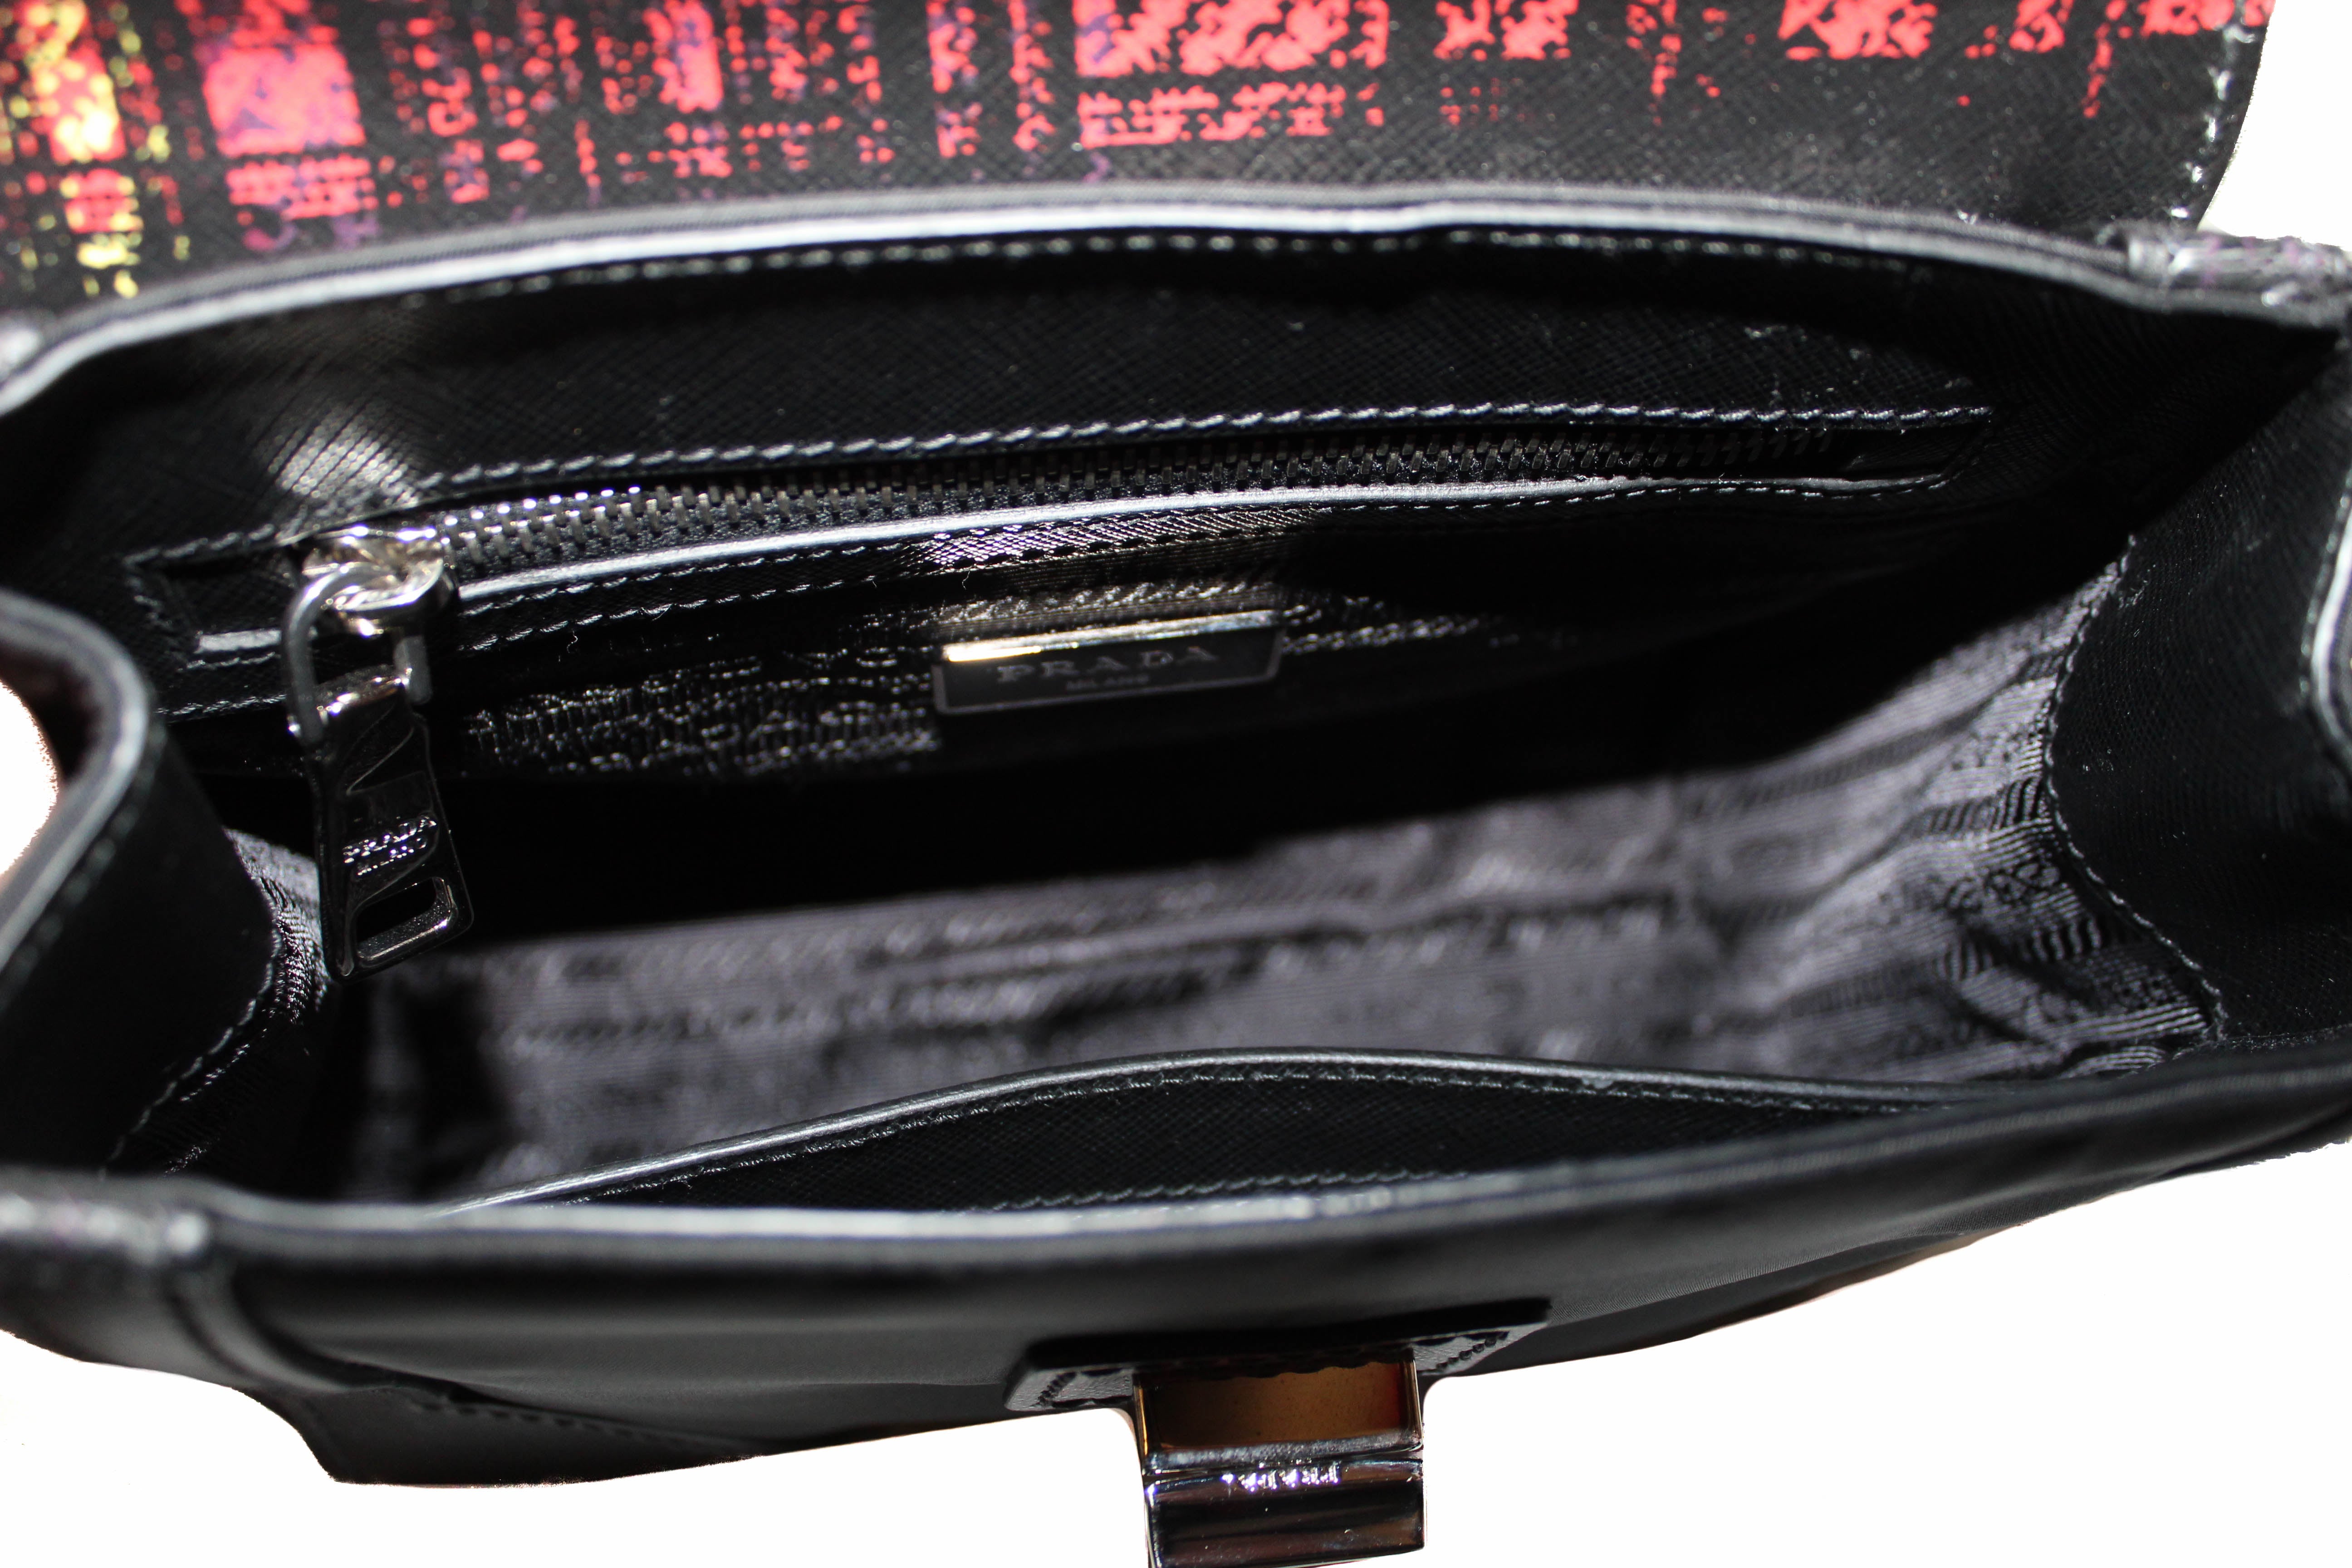 Prada Saffiano Leather Top Handle Bag on SALE